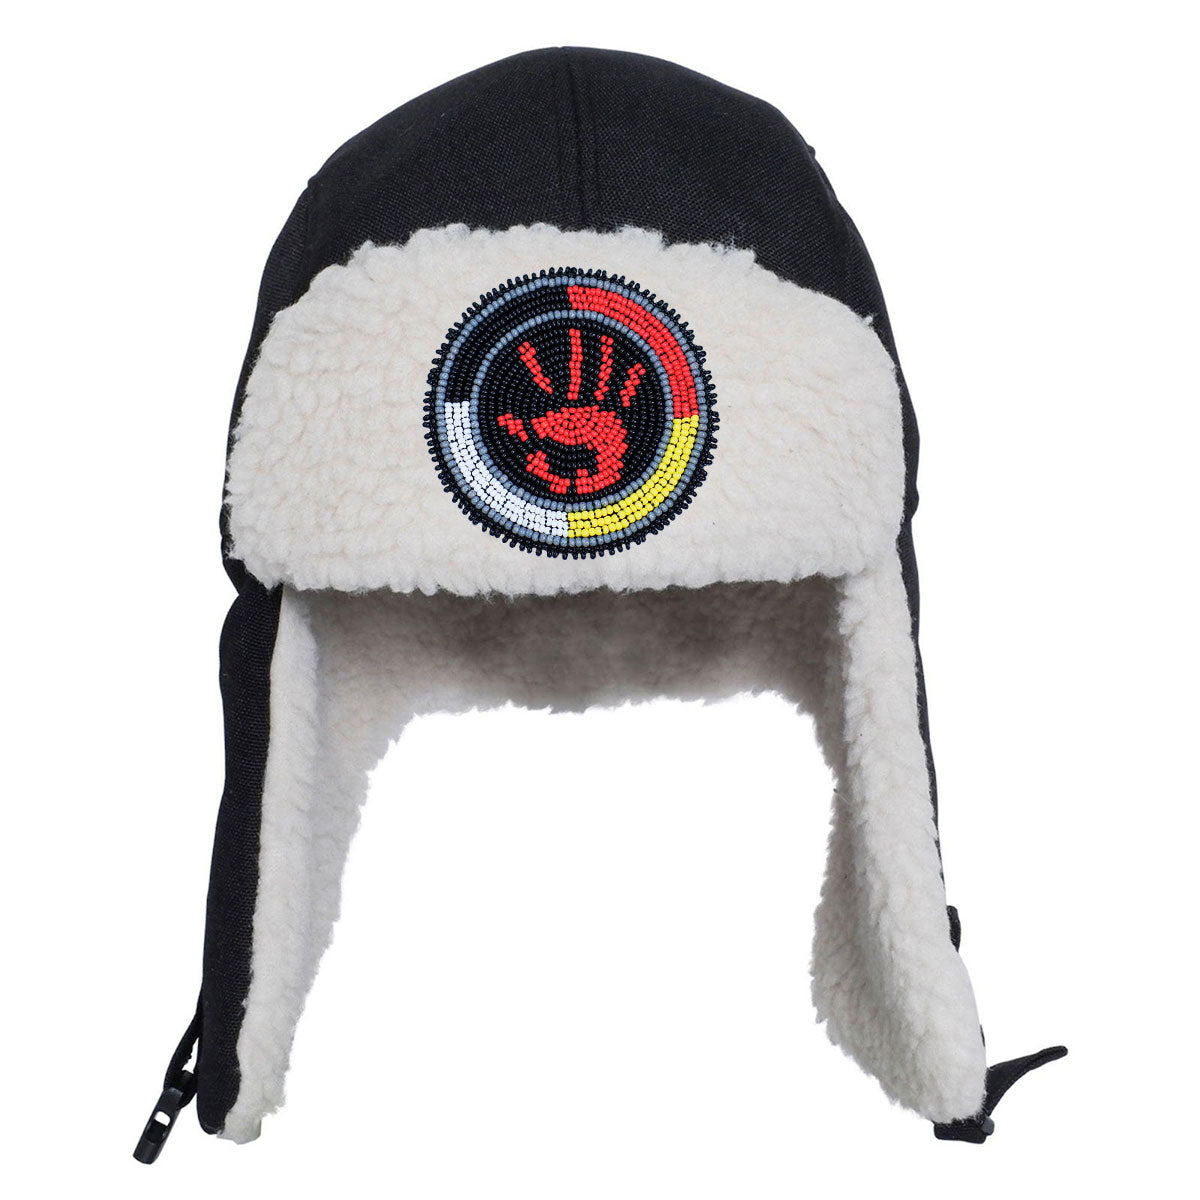 SALE 50% OFF - MMIW Beaded Winter Trapper Hats for Men Women Native American Style